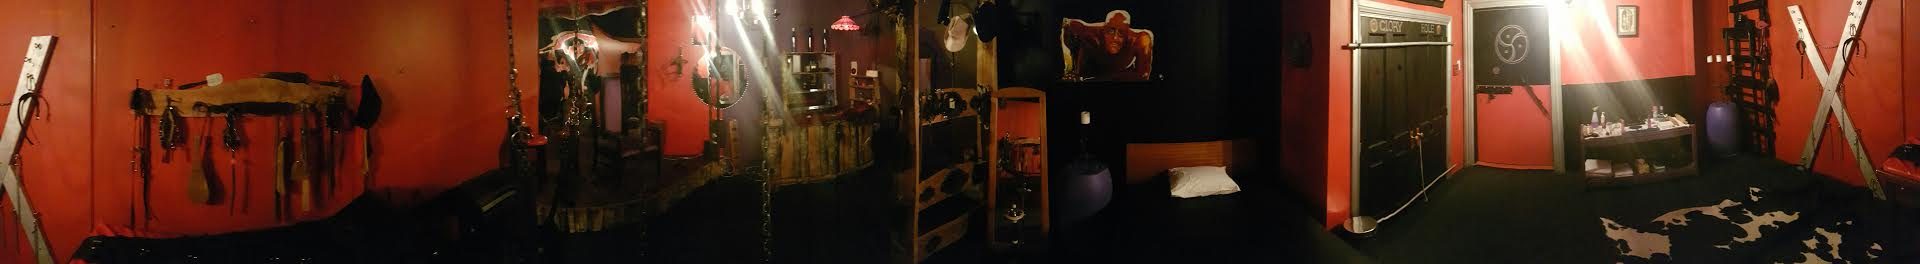 Dungeon Room - Venusroom Christchurch